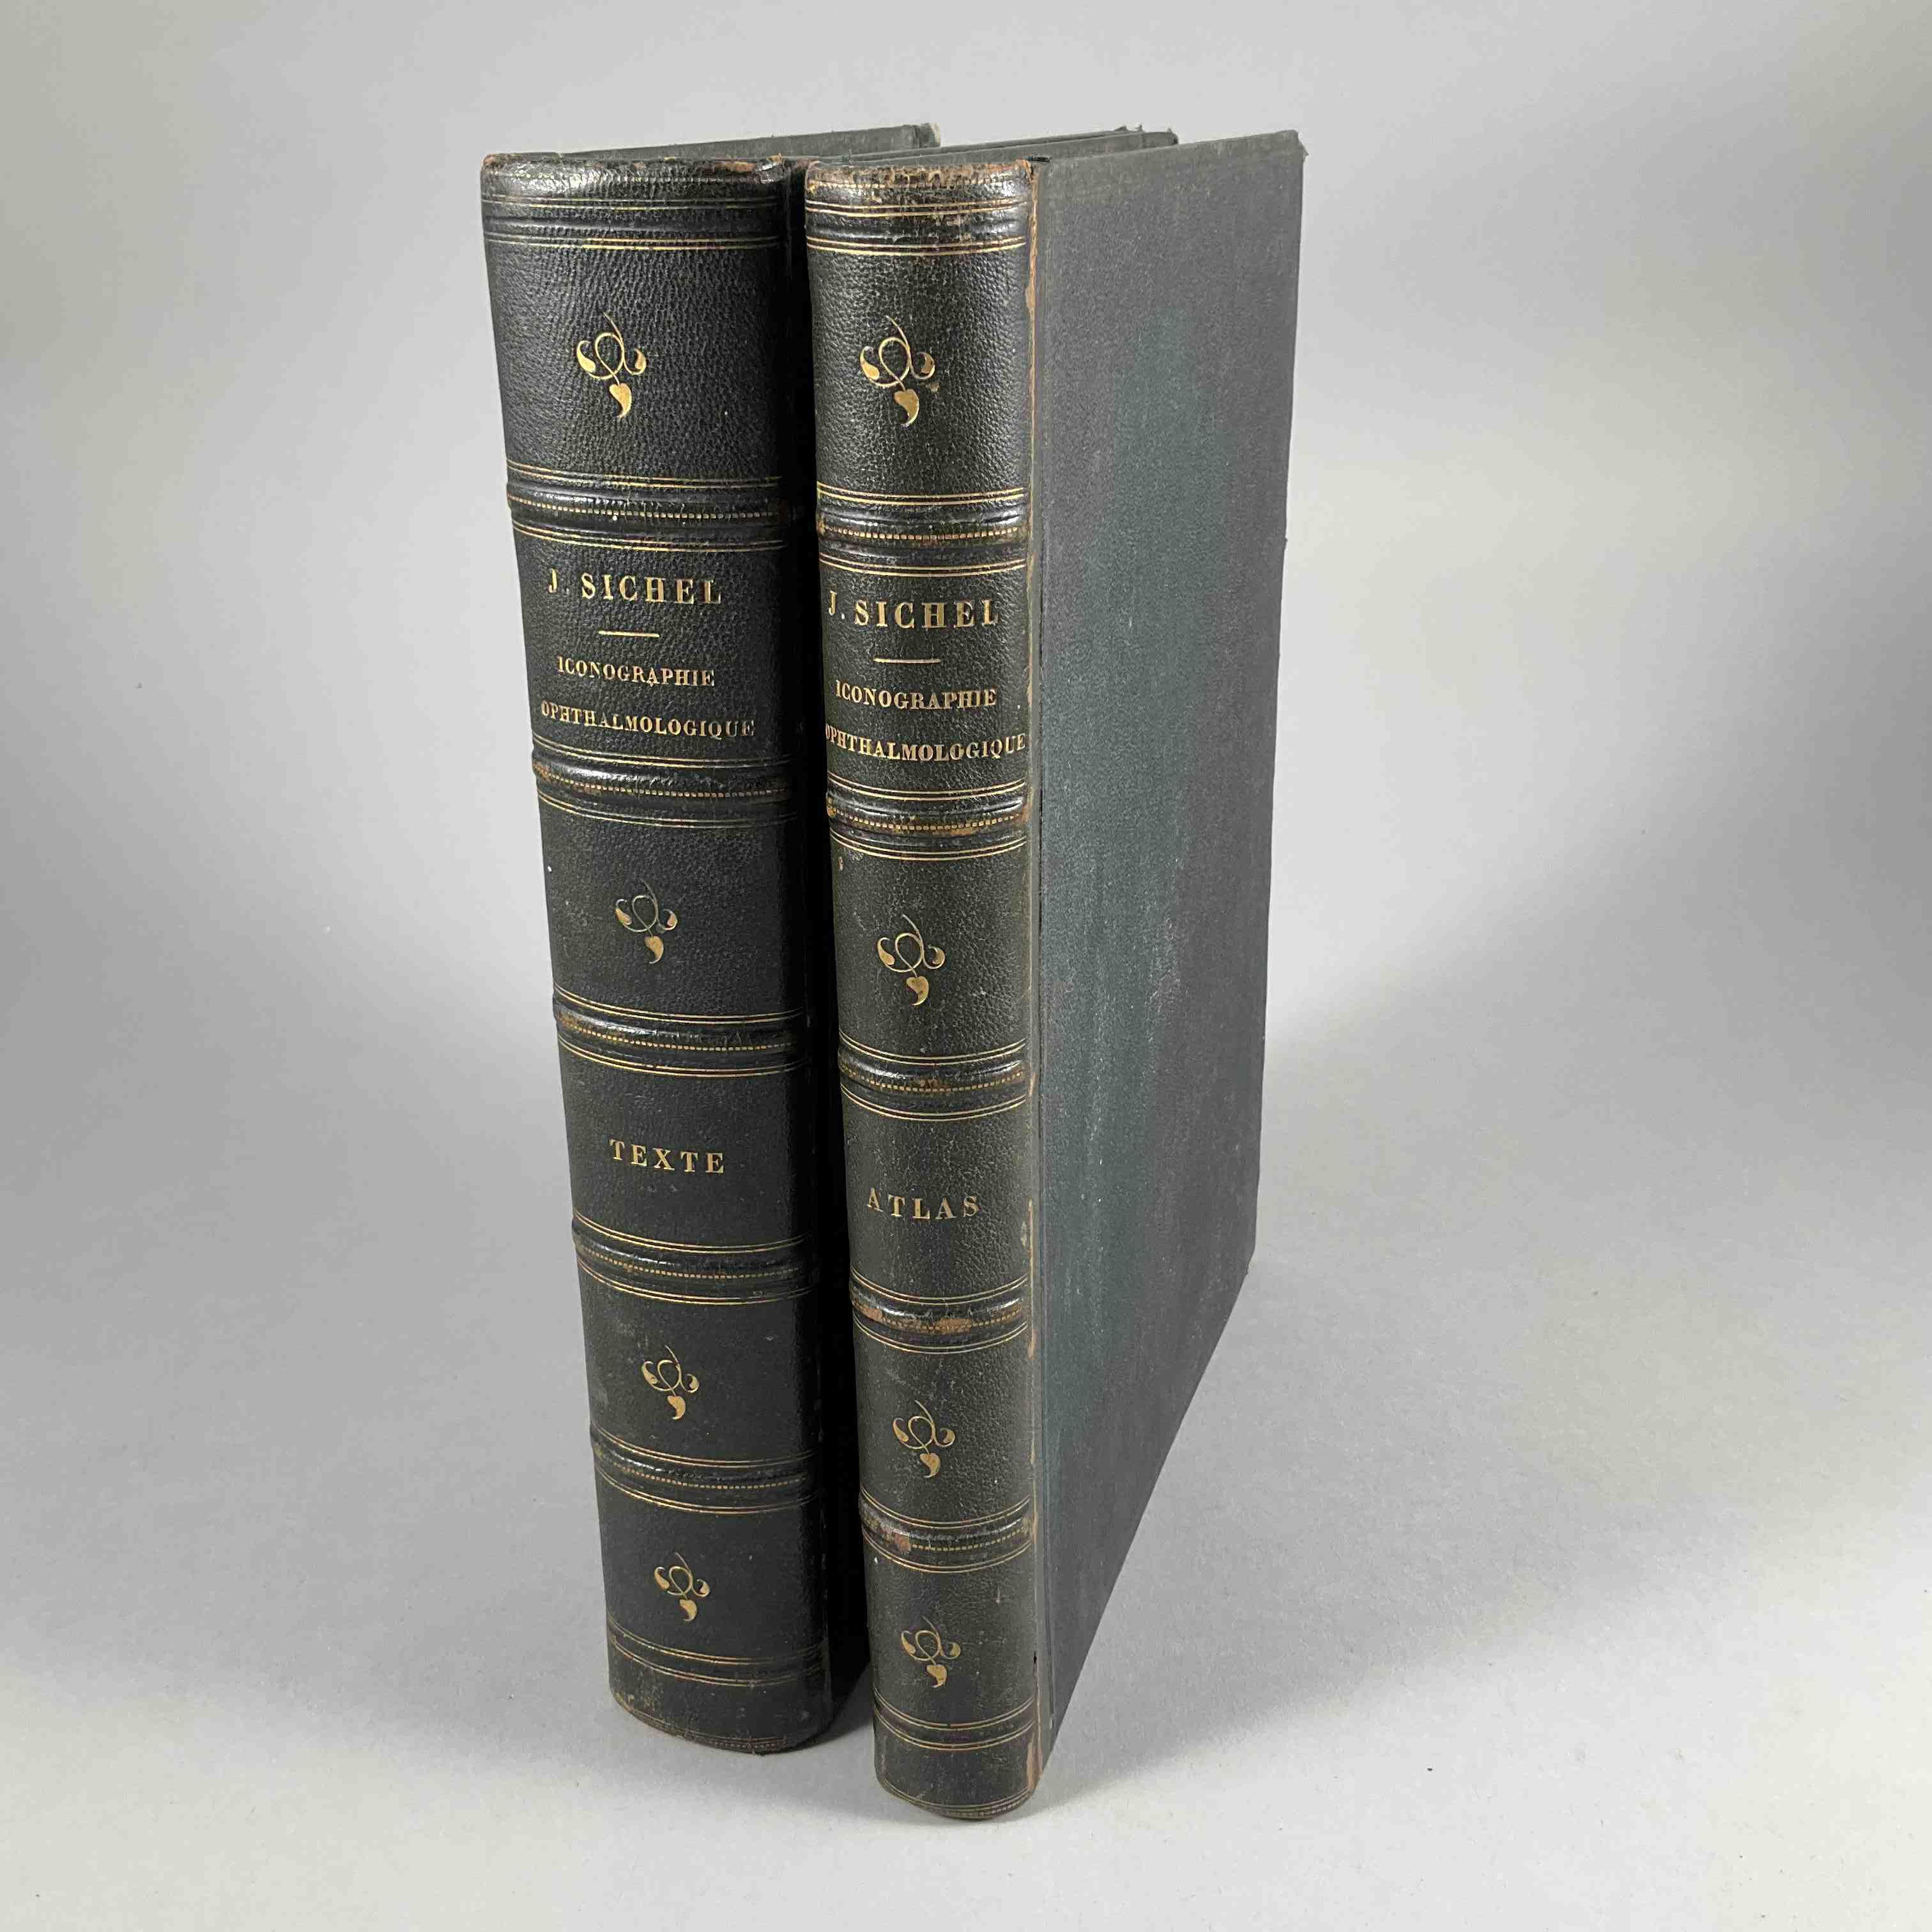 [Ophtalmologie] Jules Sichel, Iconographie ophthalmologique.Paris, Baillière, 1852-1859, 2 volumes in-4,...